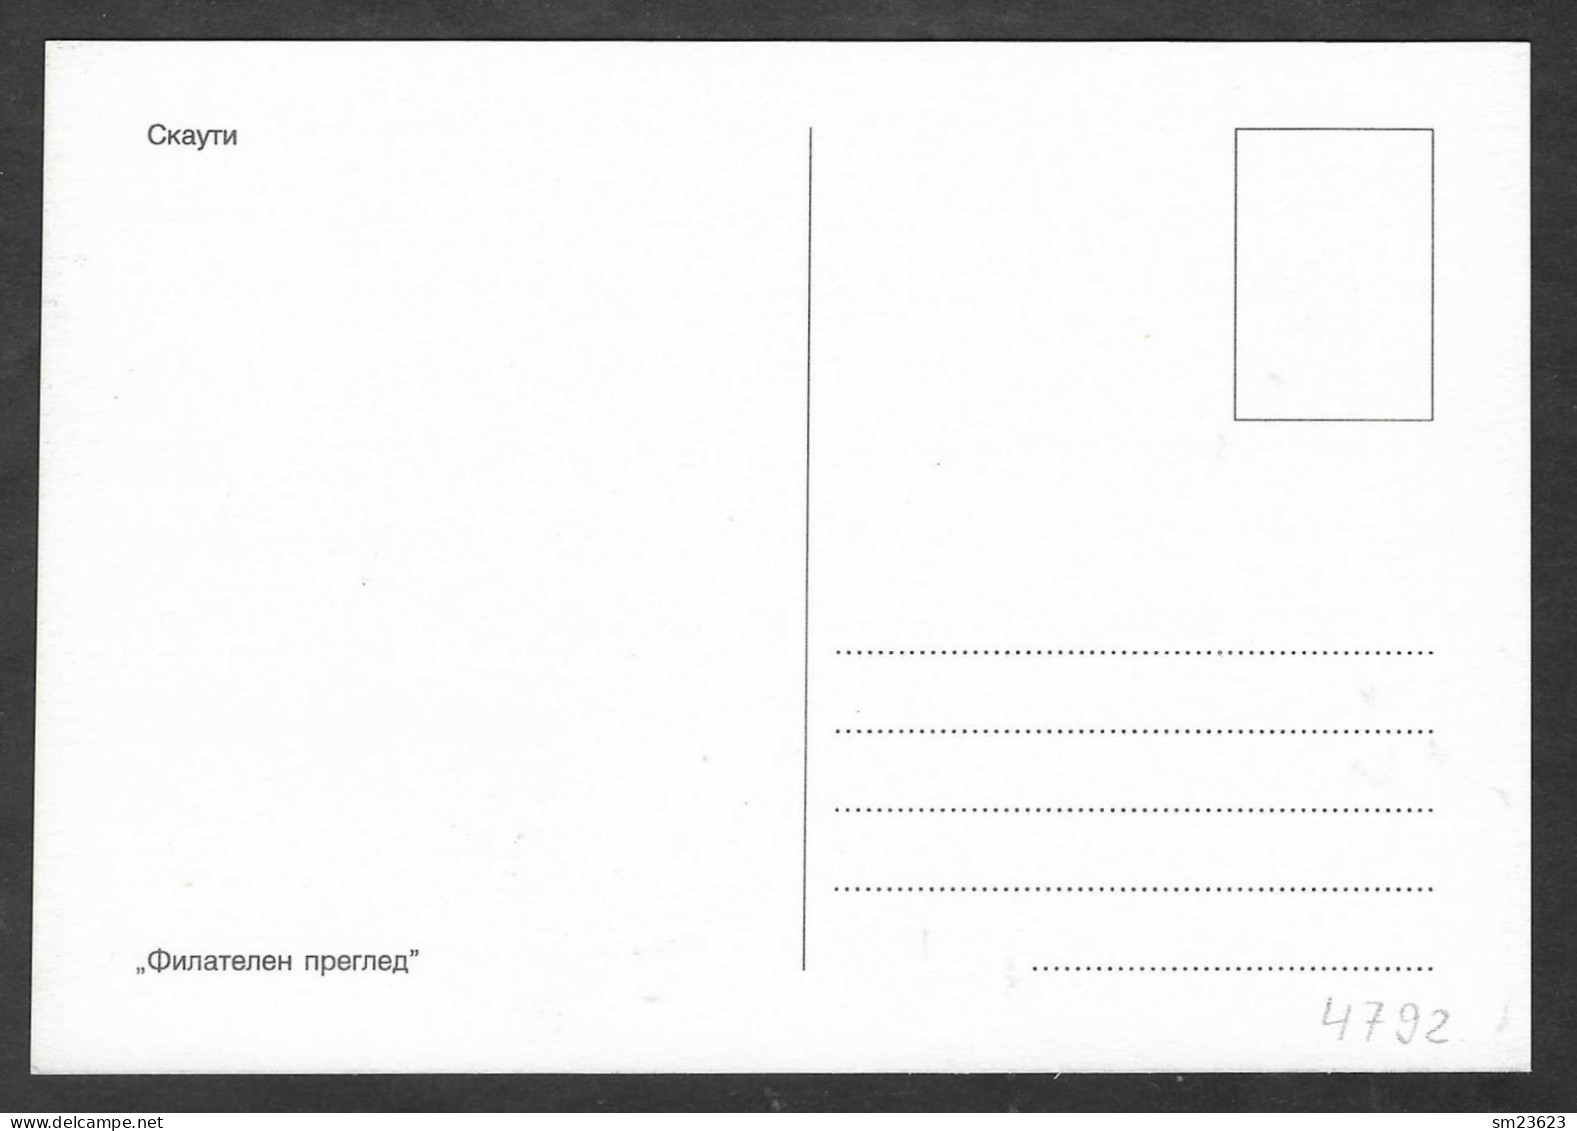 Bulgarien / Bulgaria  2007  Mi.Nr. 4792 , EUROPA CEPT - Pfadfinder / Skauting - Maximum Card - Ckaytn 26.04.2007 - 2007